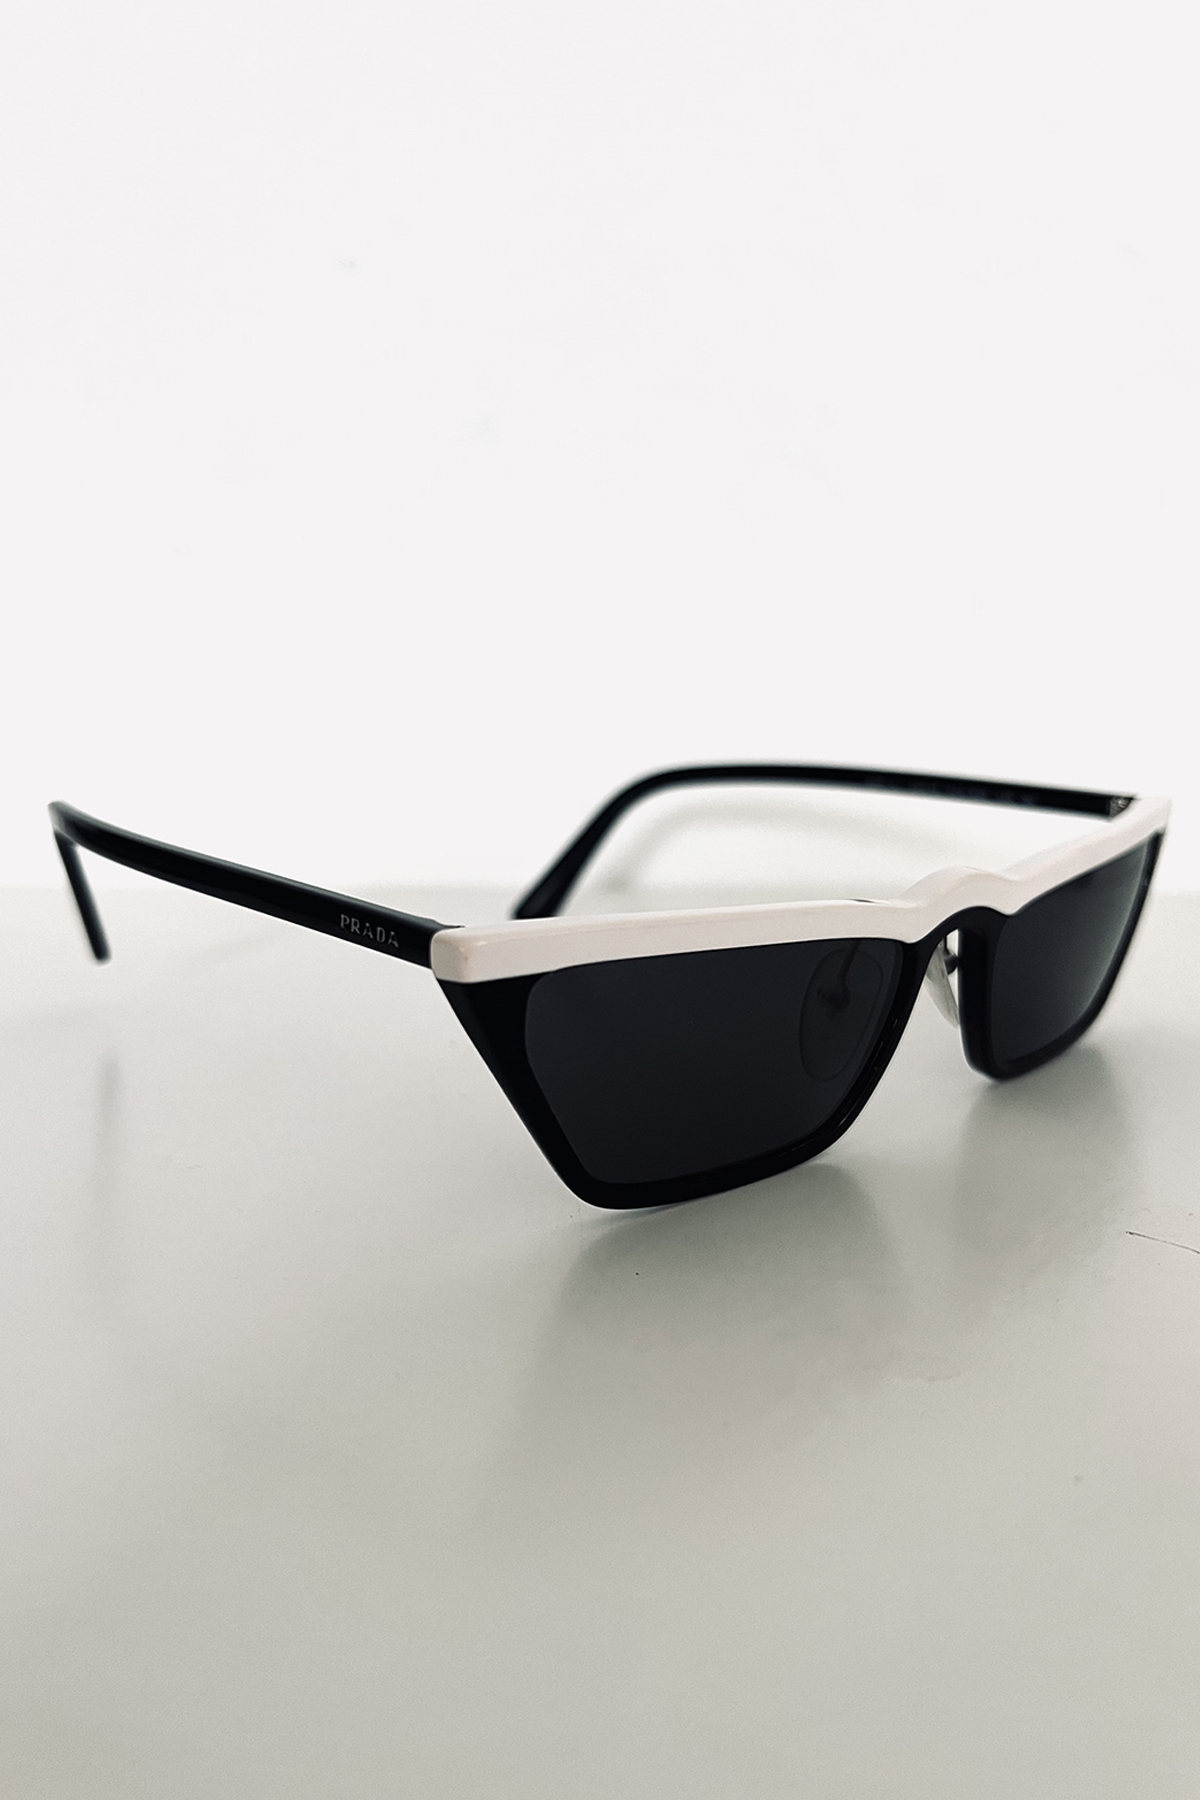 Prada Sunglasses with Box